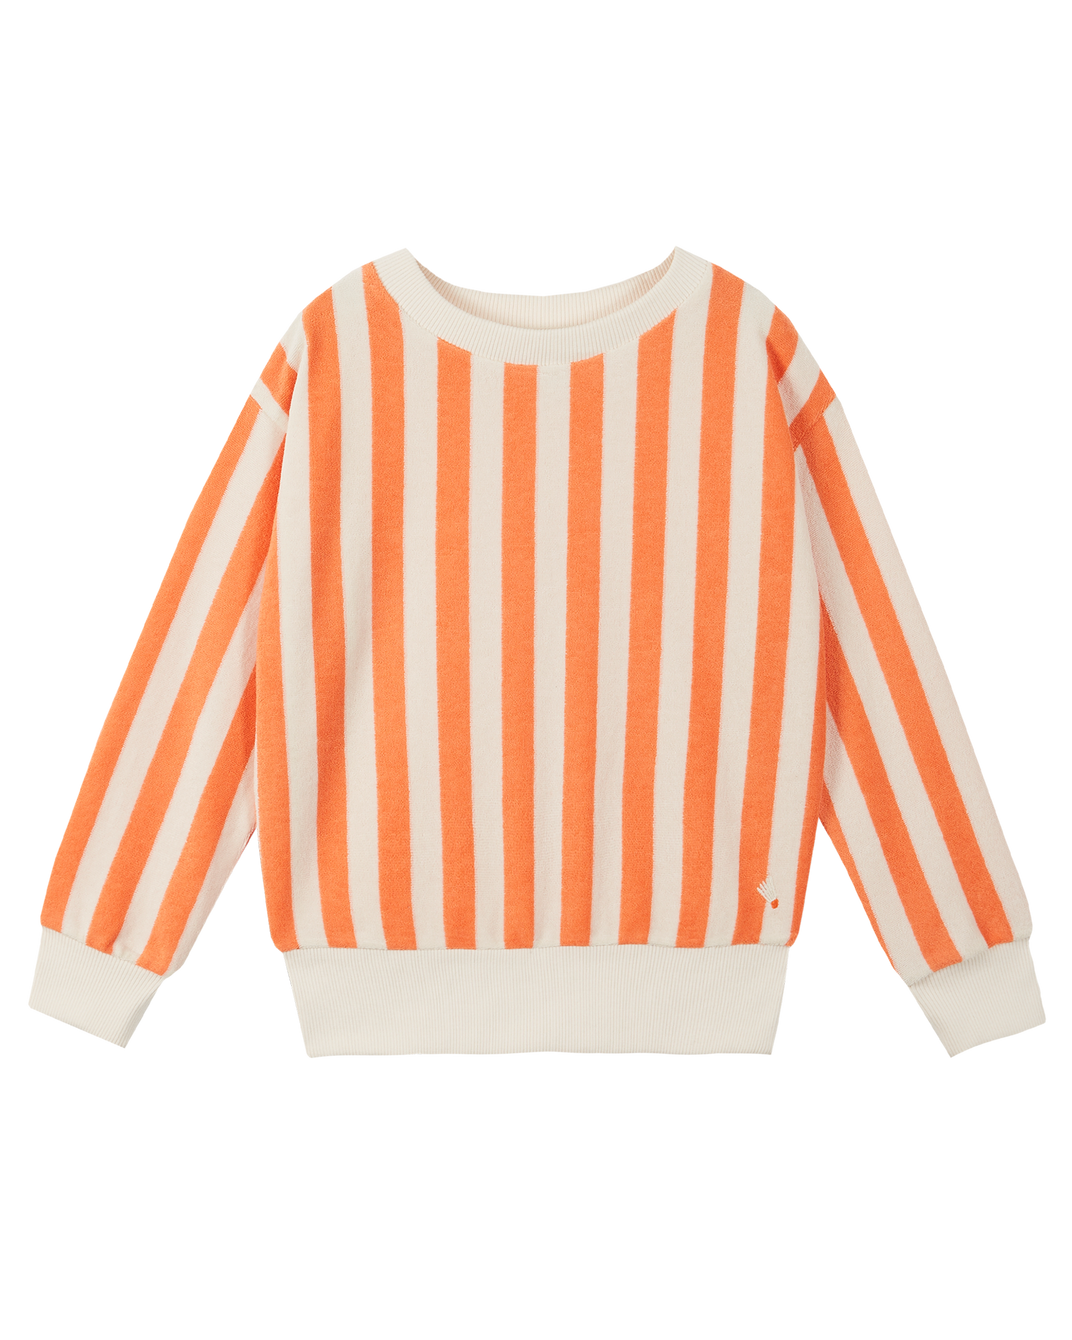 Sweatshirt éponge rayé orange et blanc